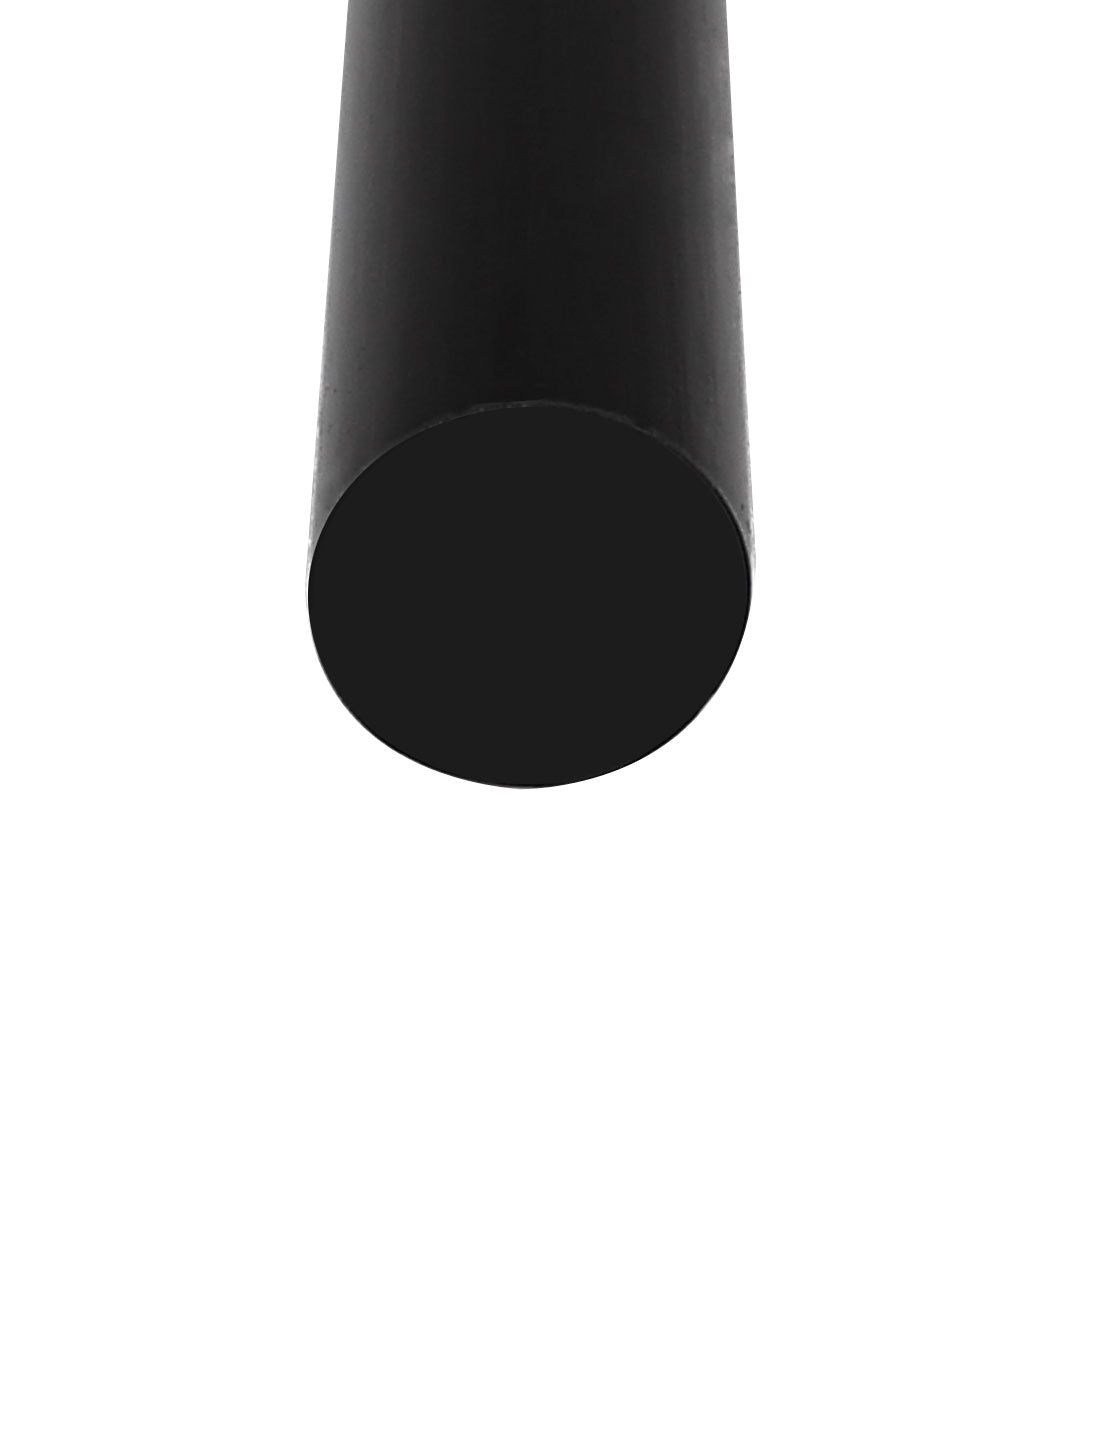 uxcell Uxcell 20 Pcs 7mm Diameter 190mm Long Crafting Models Black Plastic Hot Melt Glue Stick